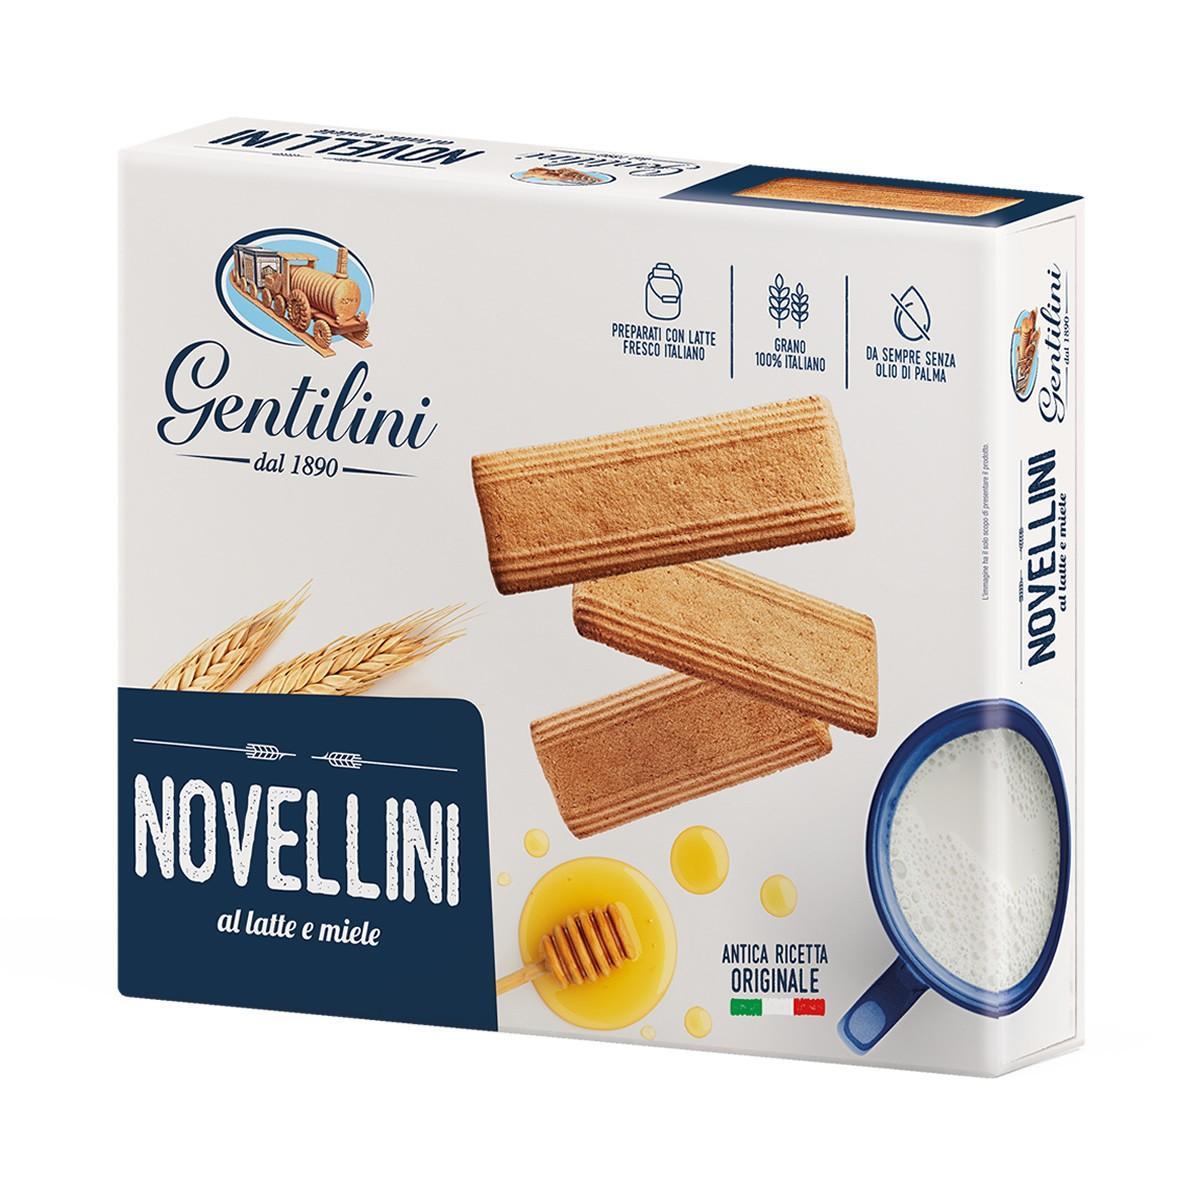 biscotti-novellini-gentilini-500gr-1